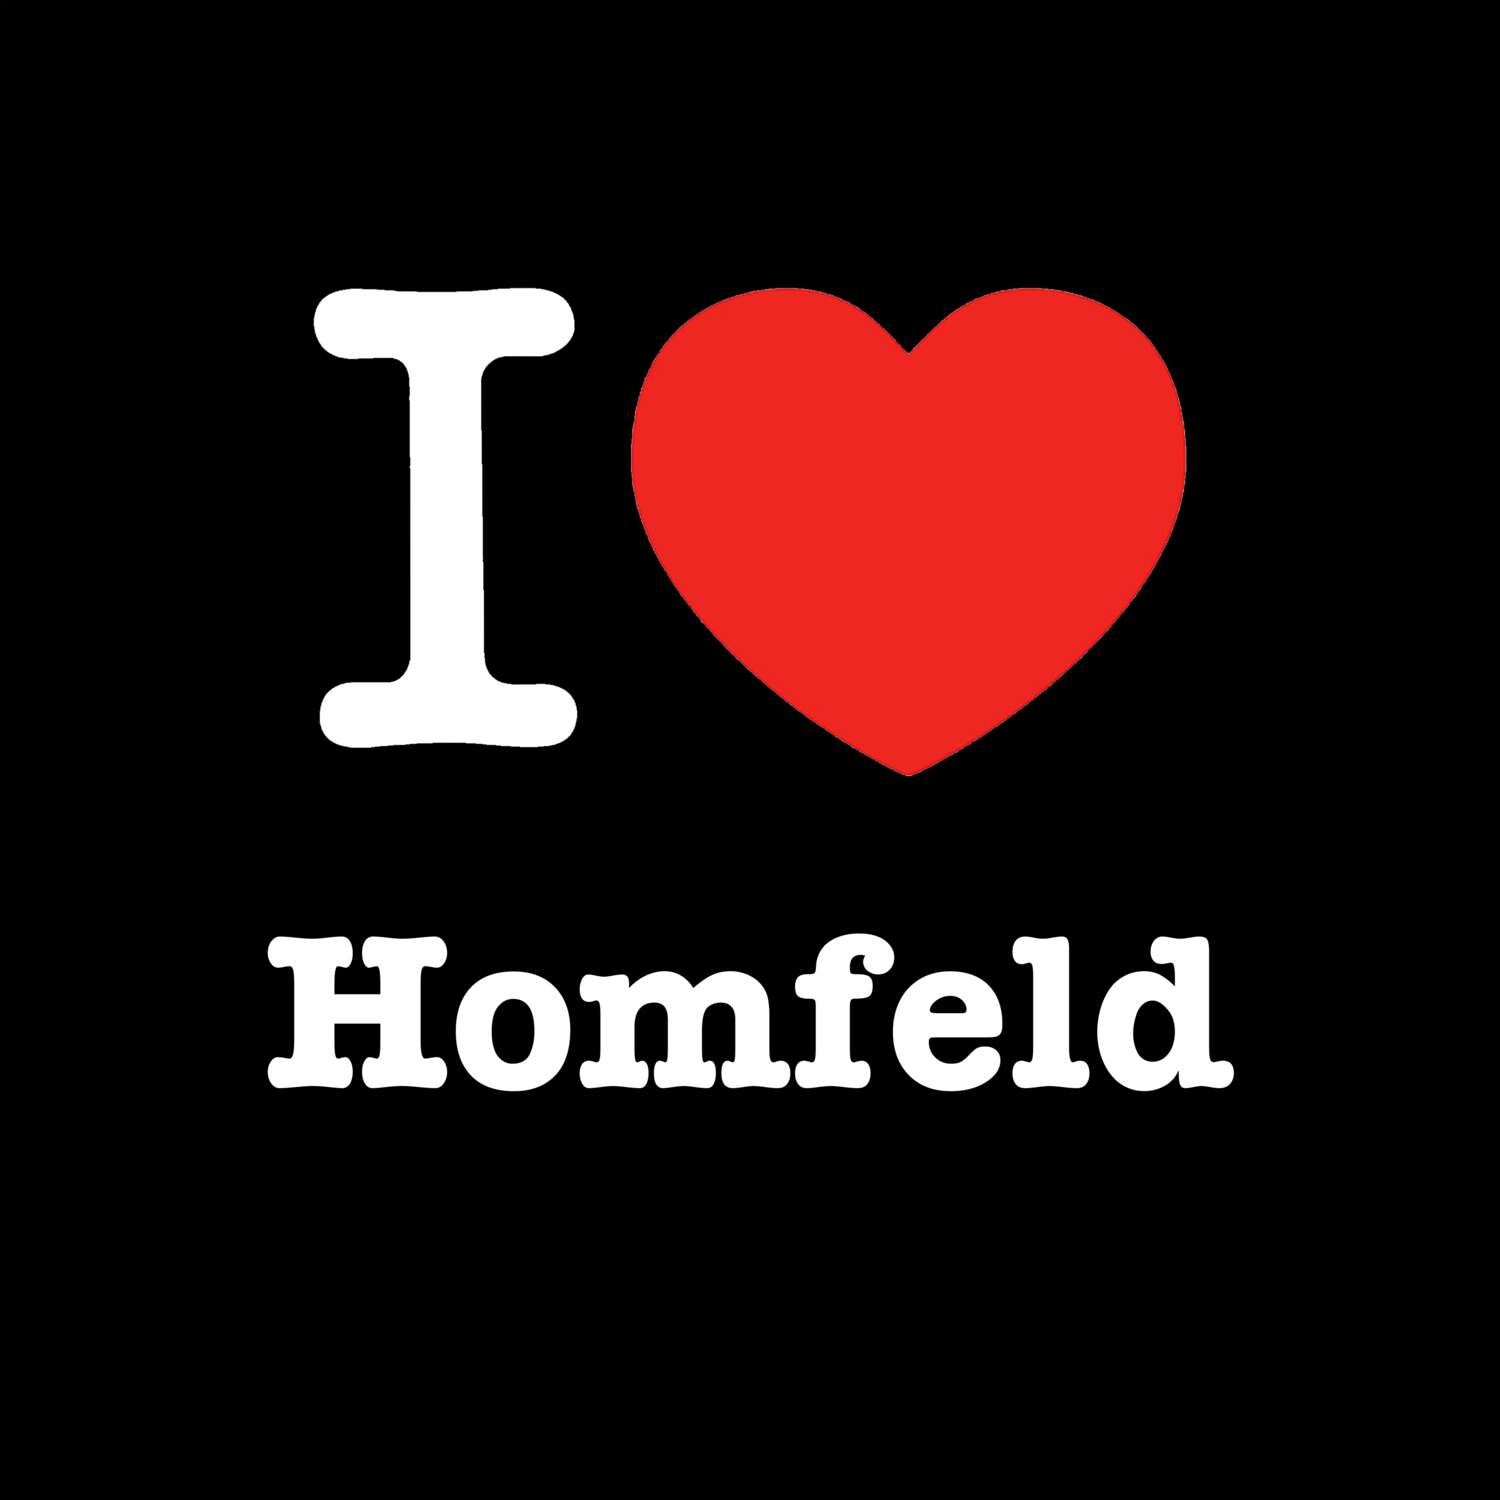 Homfeld T-Shirt »I love«